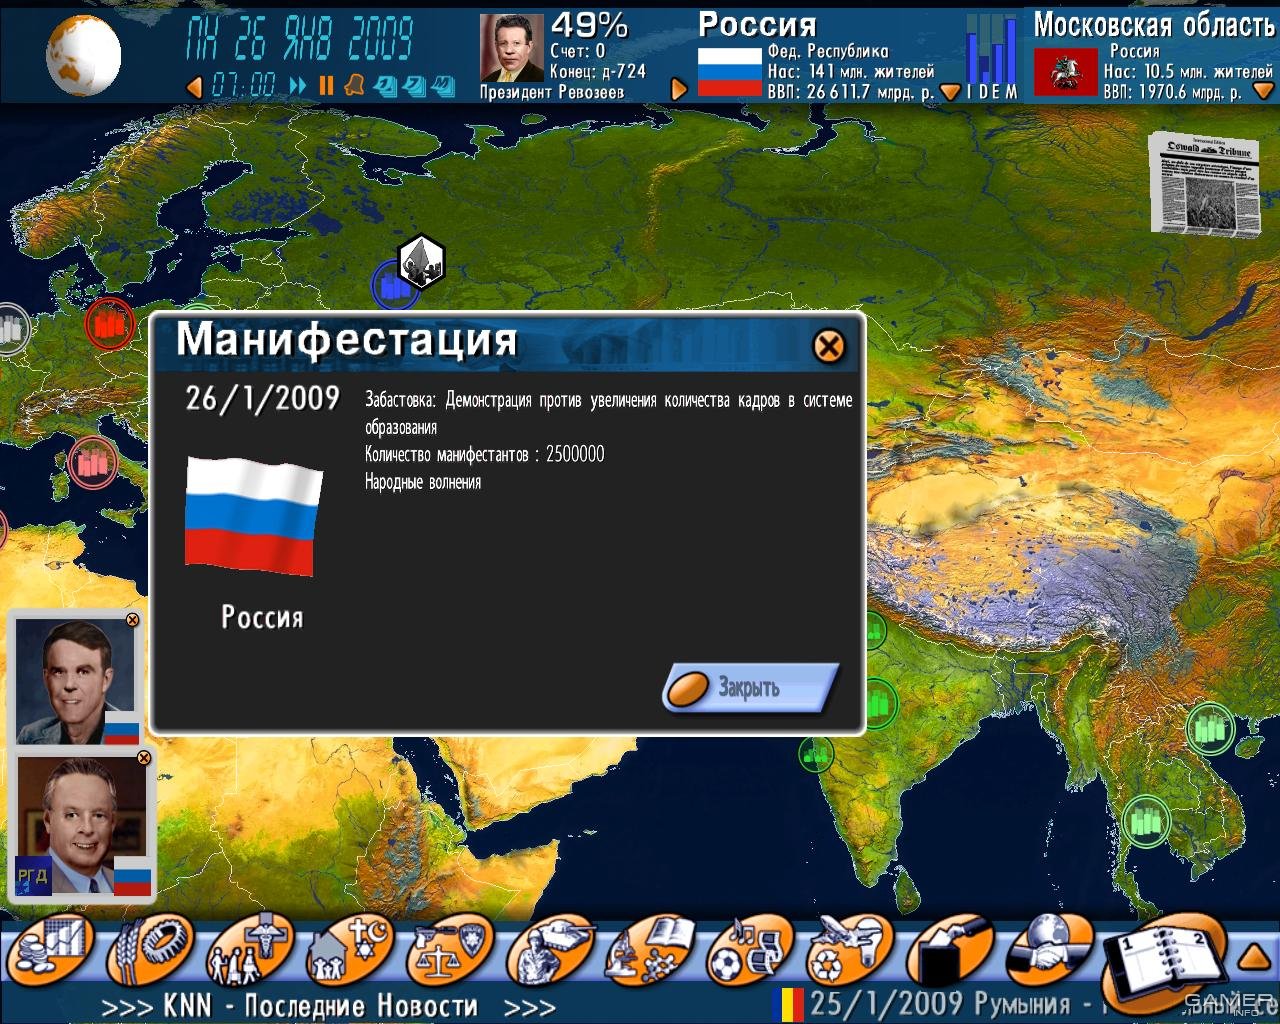 geopolitical simulator 4 download